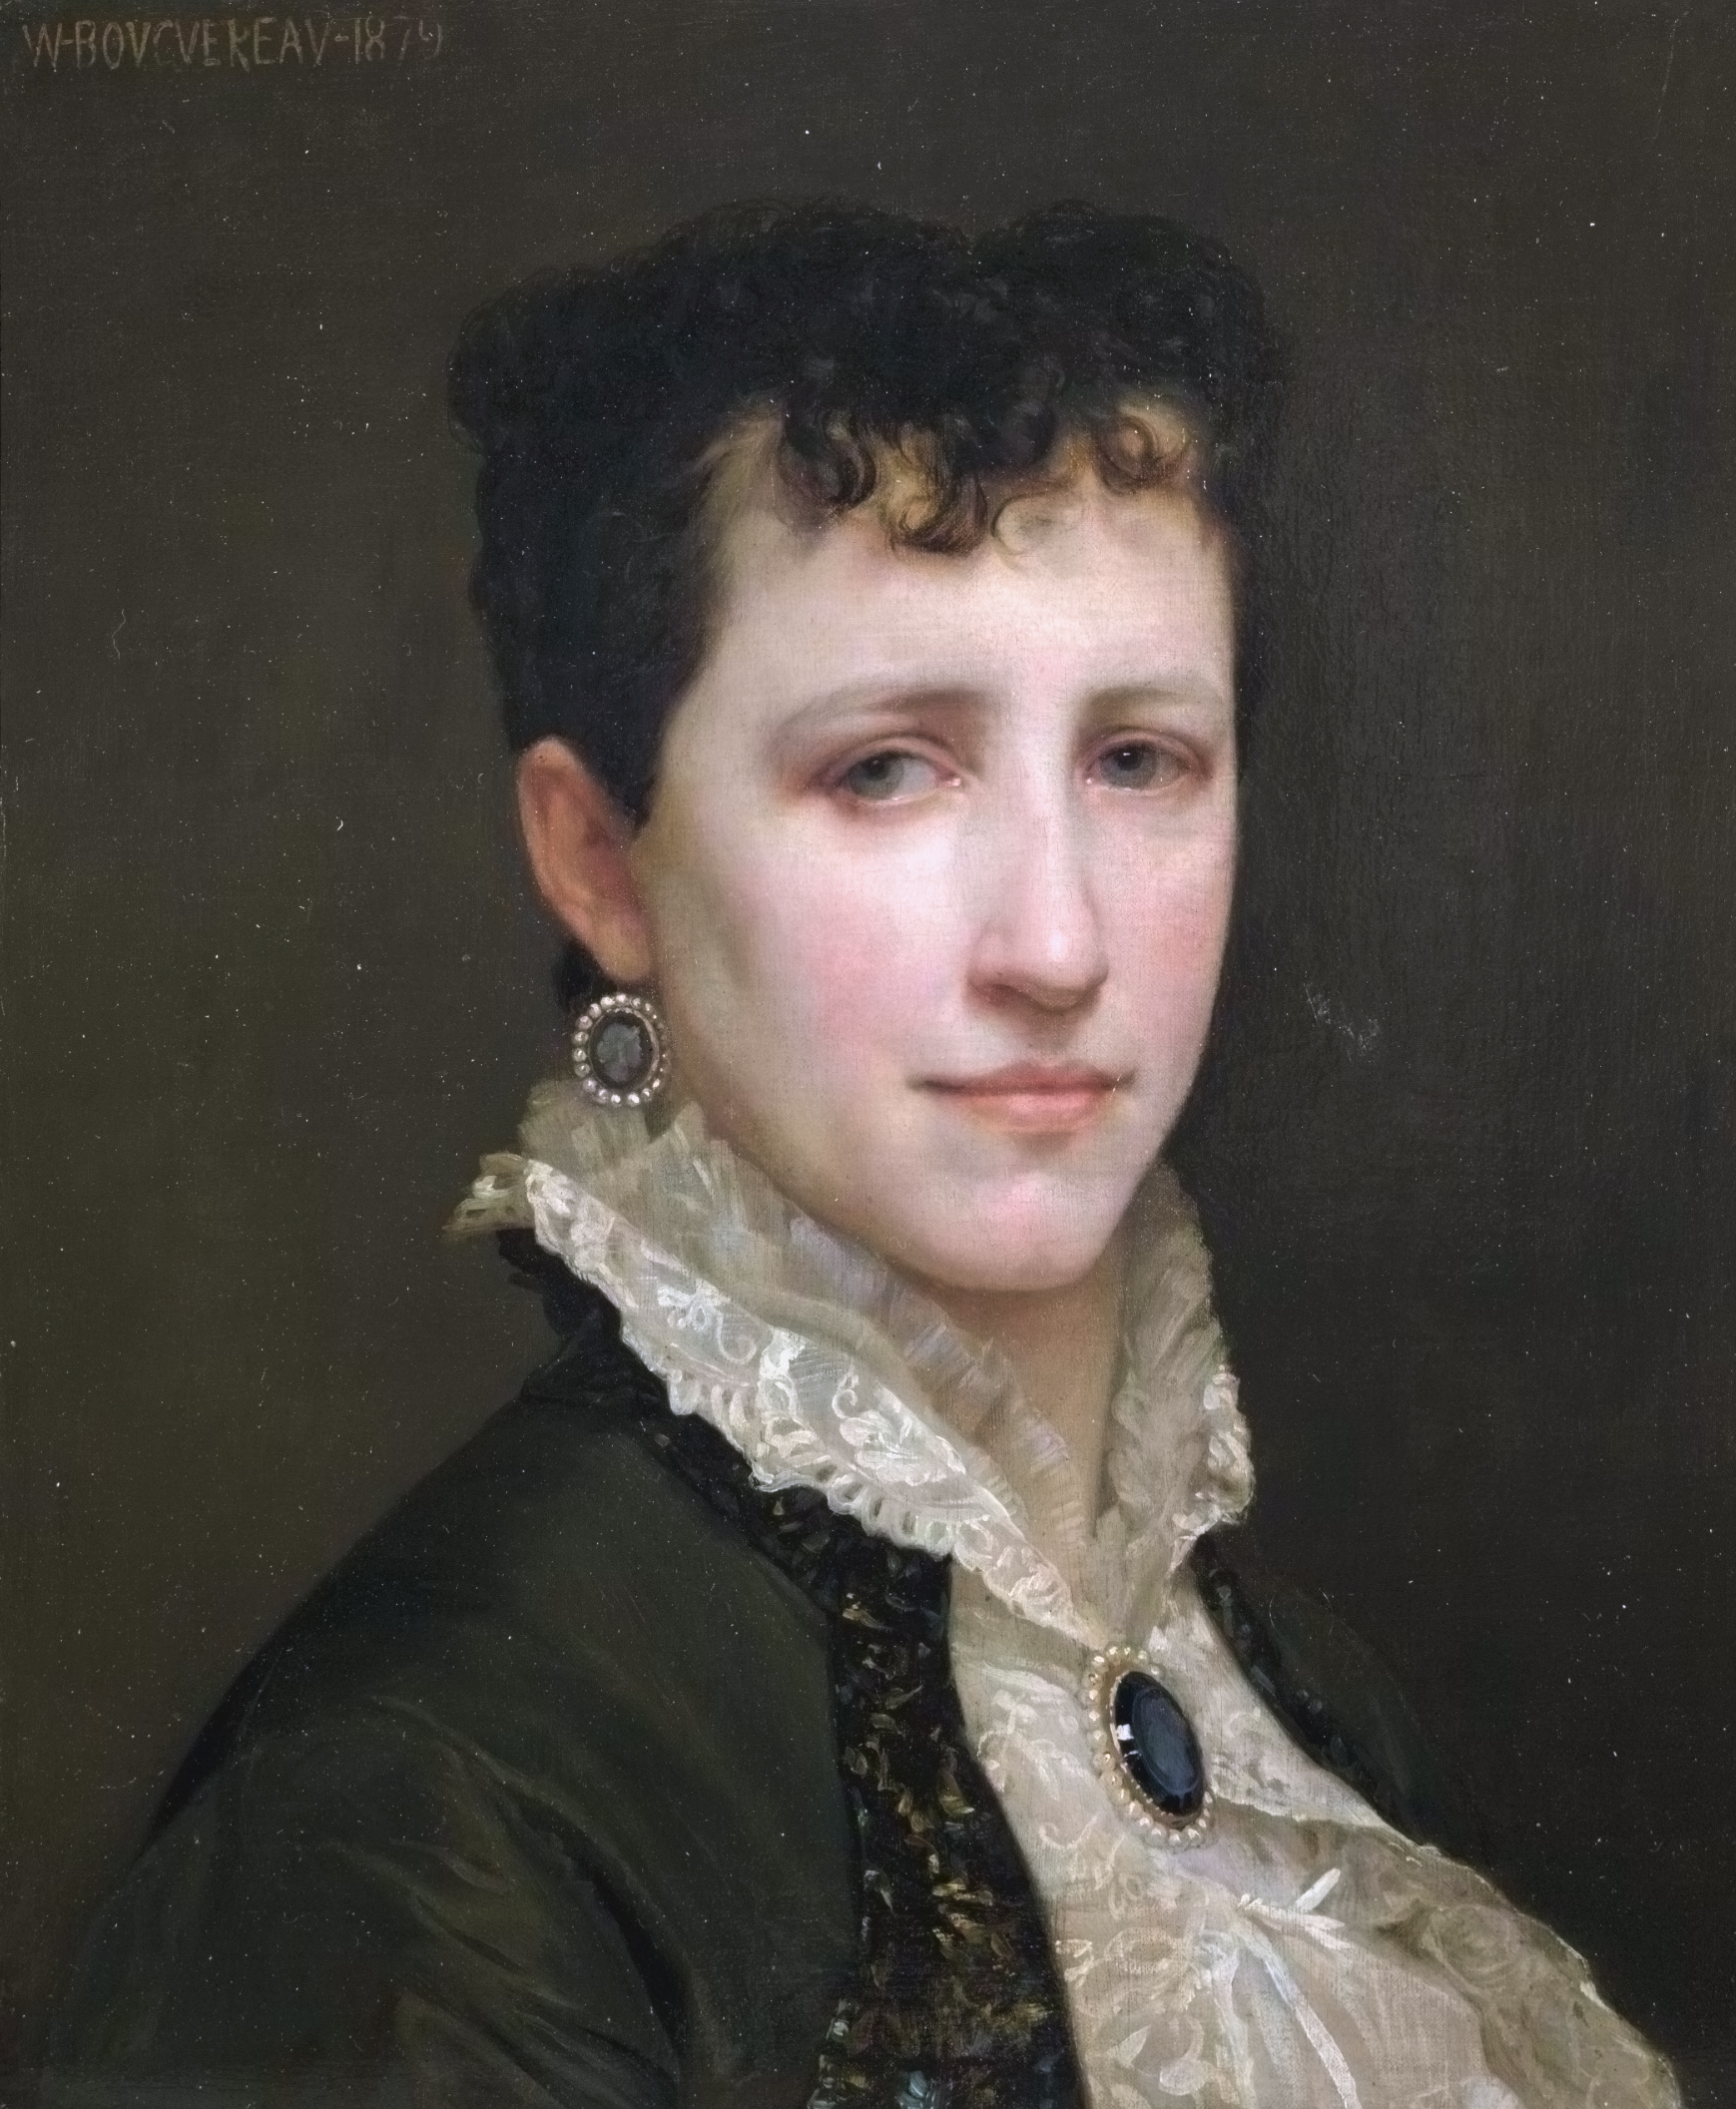 Elizabeth Jane Gardner Bouguereau - October 4, 1837 - January 28, 1922